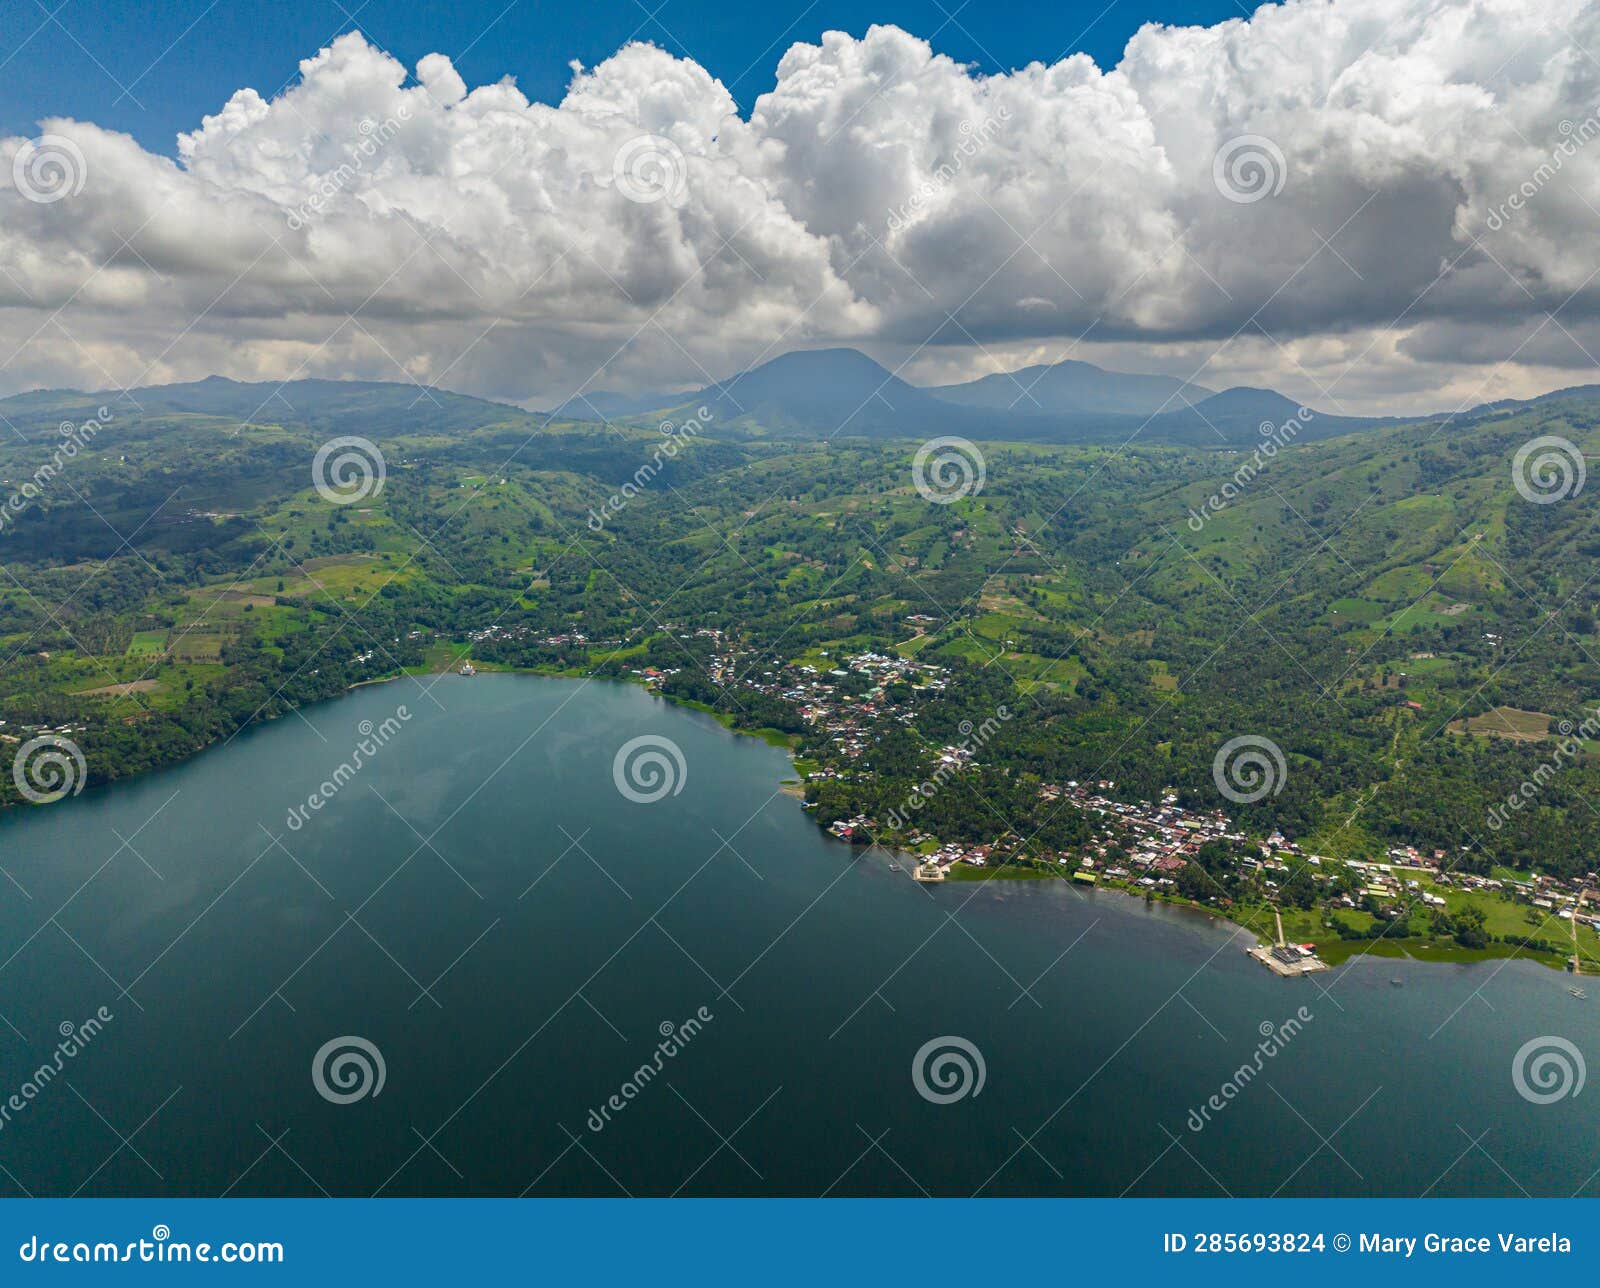 lanao del sur: lake lanao and mountain in mindanao.